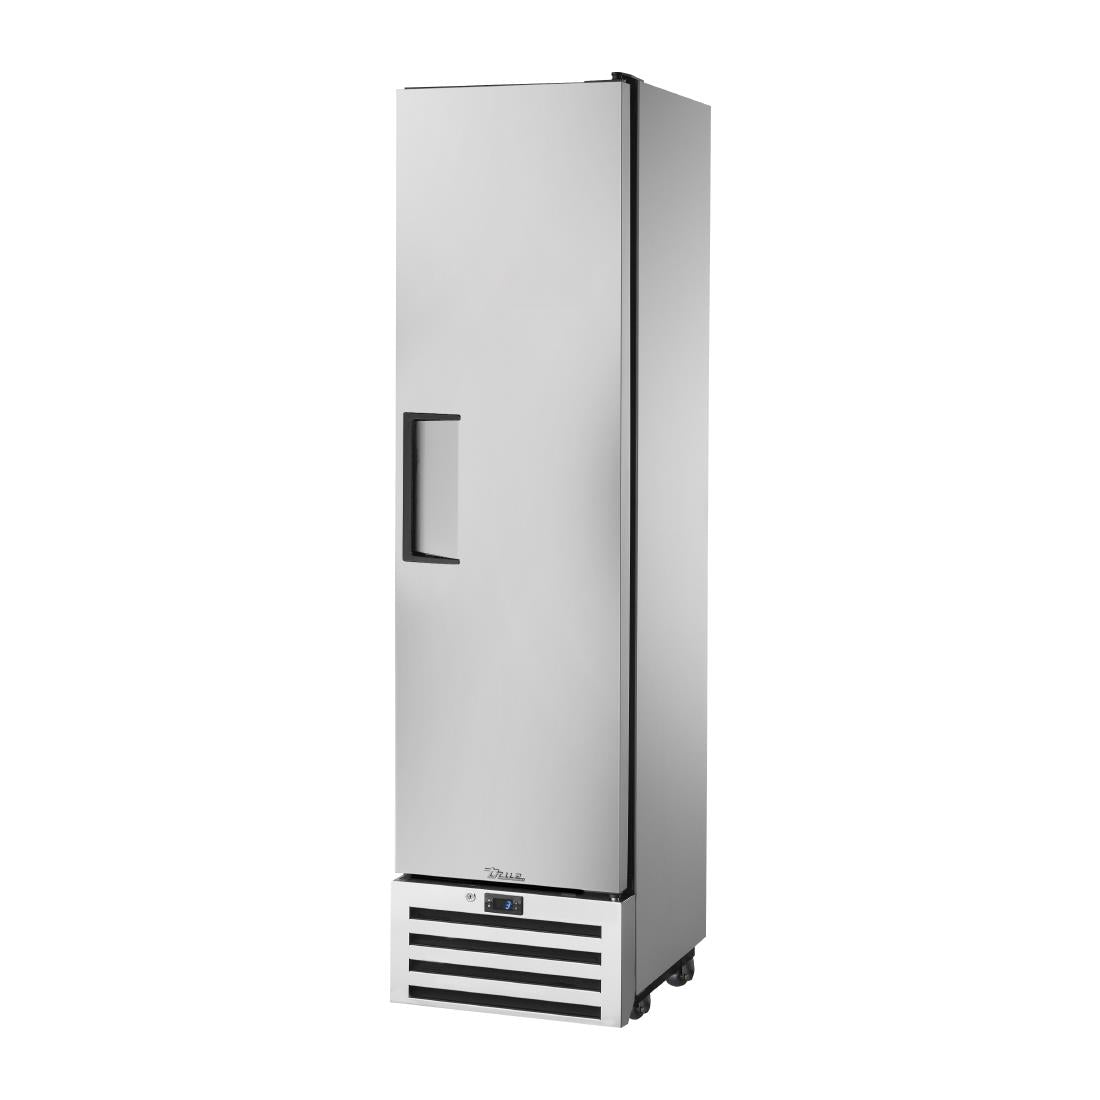 CX717 True Super Slimline Upright Foodservice Refrigerator T-11-HC JD Catering Equipment Solutions Ltd